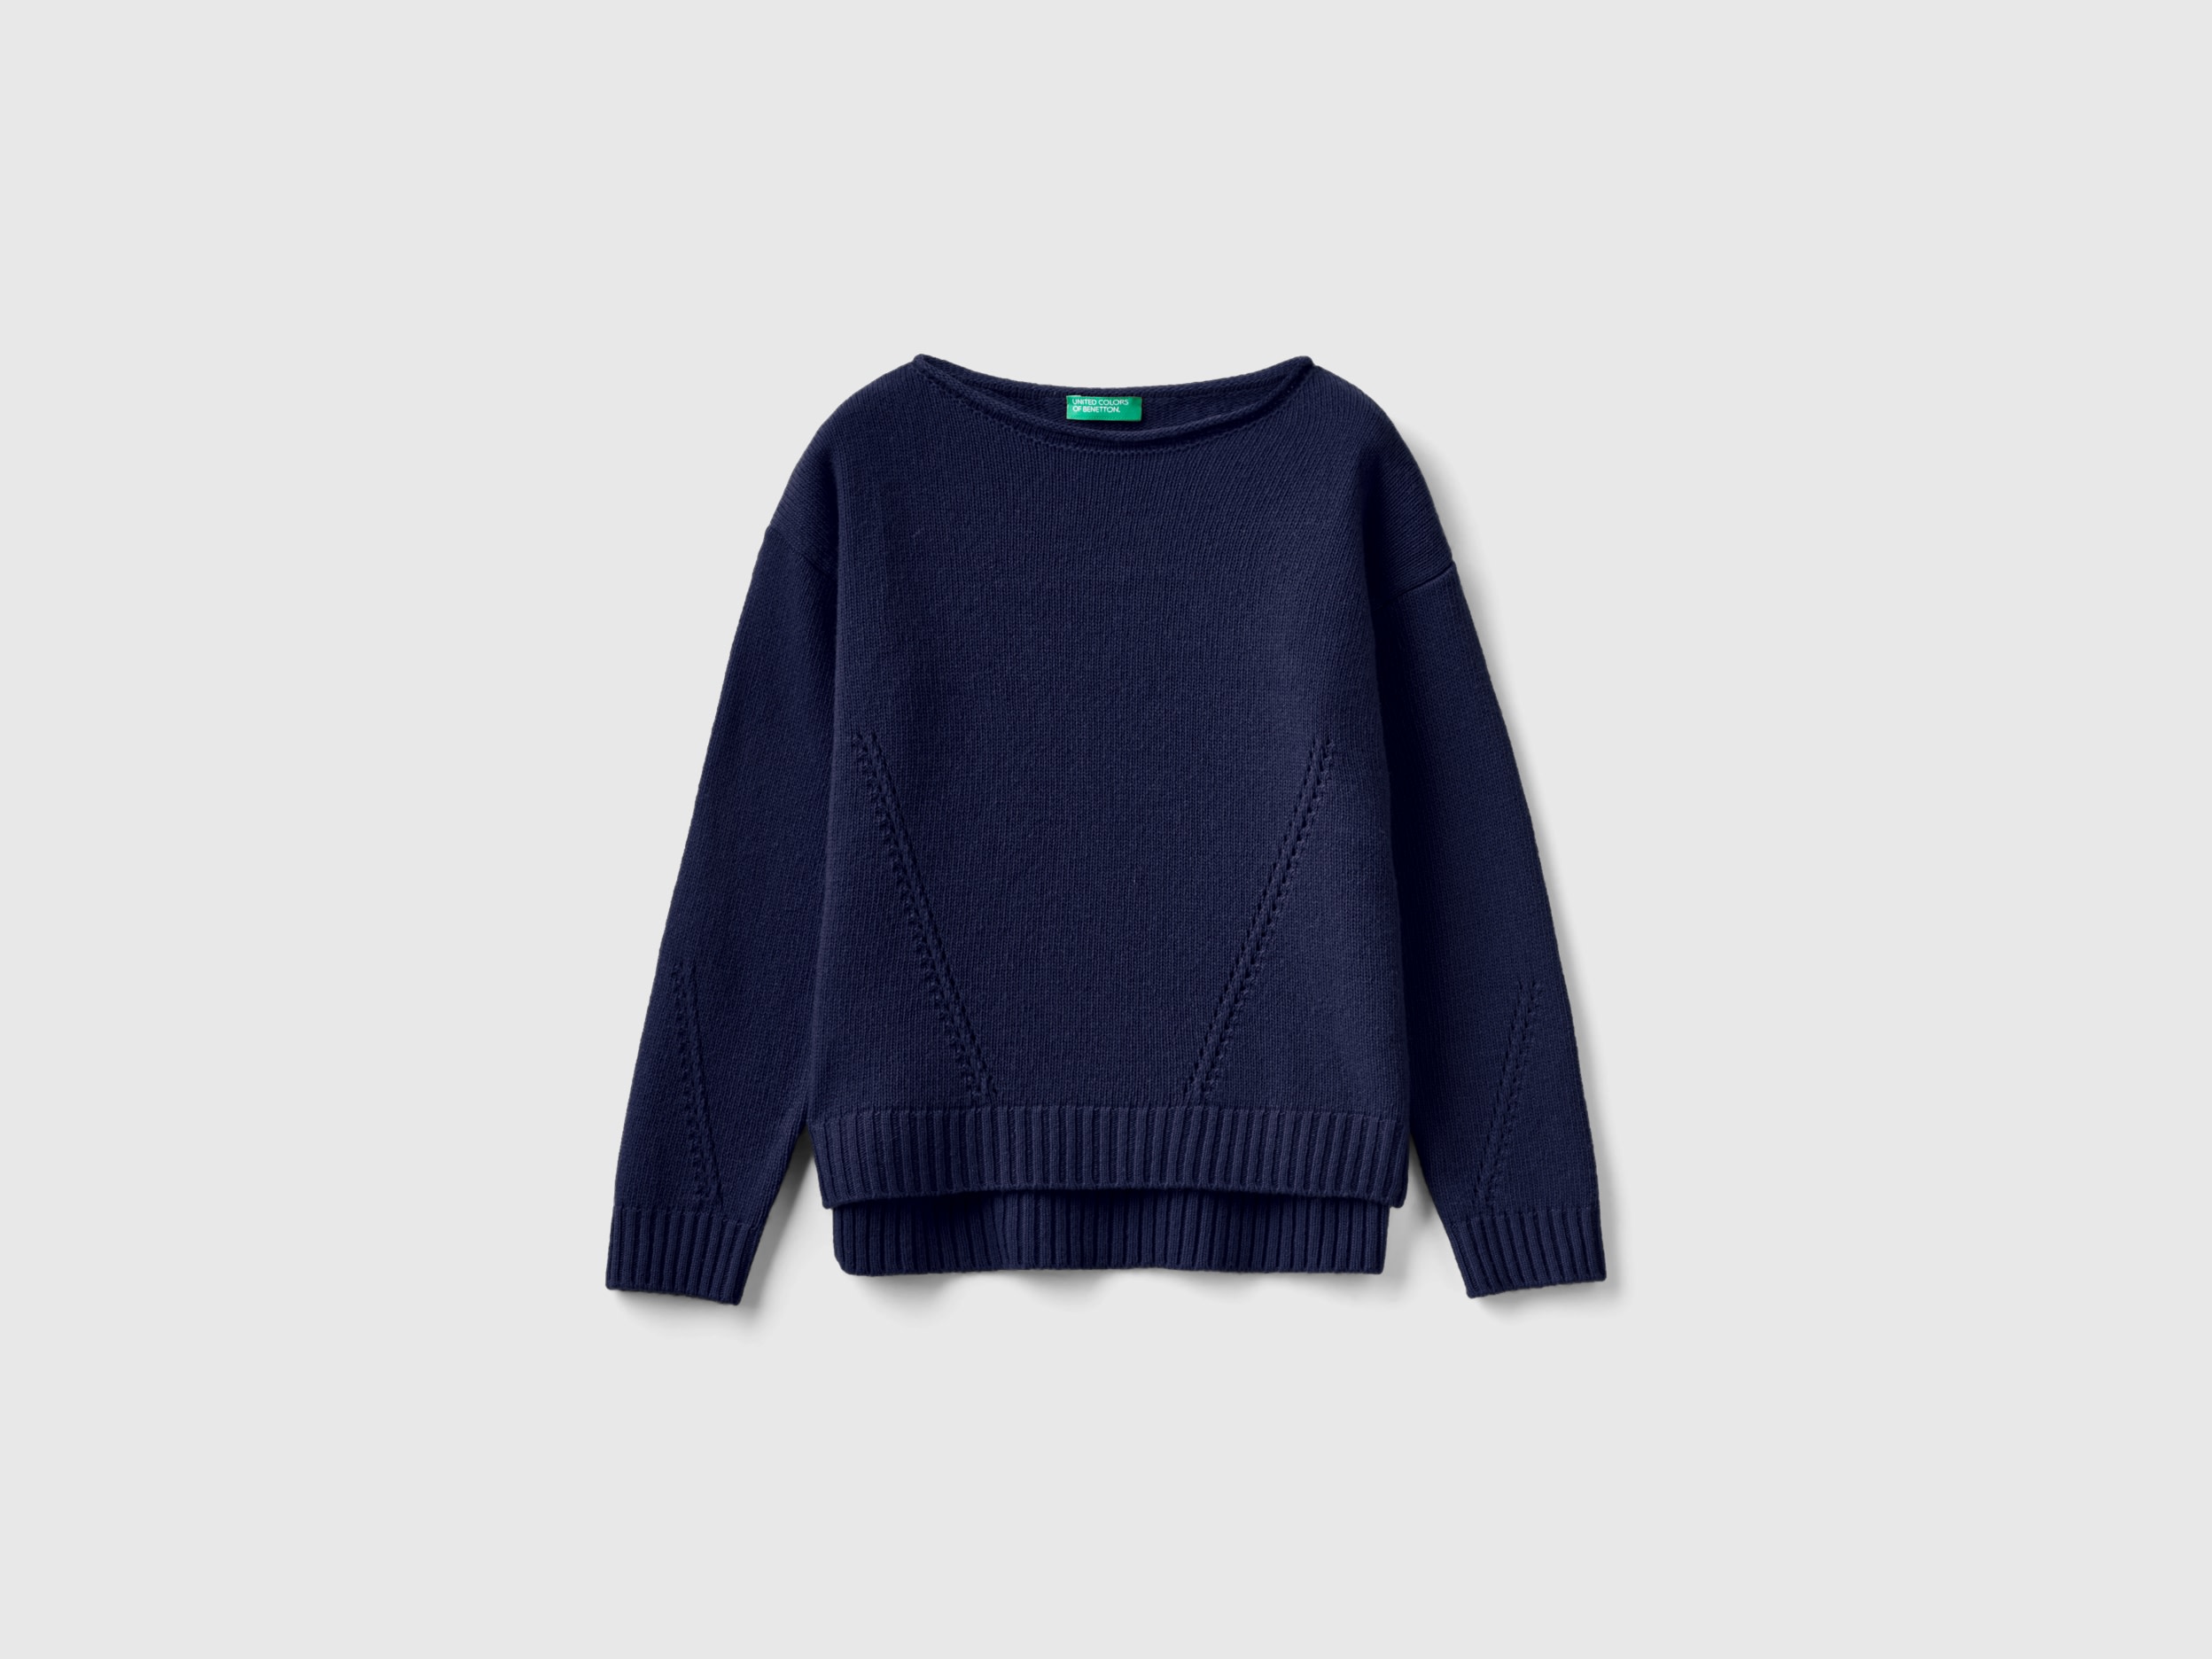 Benetton, Knit Sweater With Playful Stitching, size XL, Dark Blue, Kids